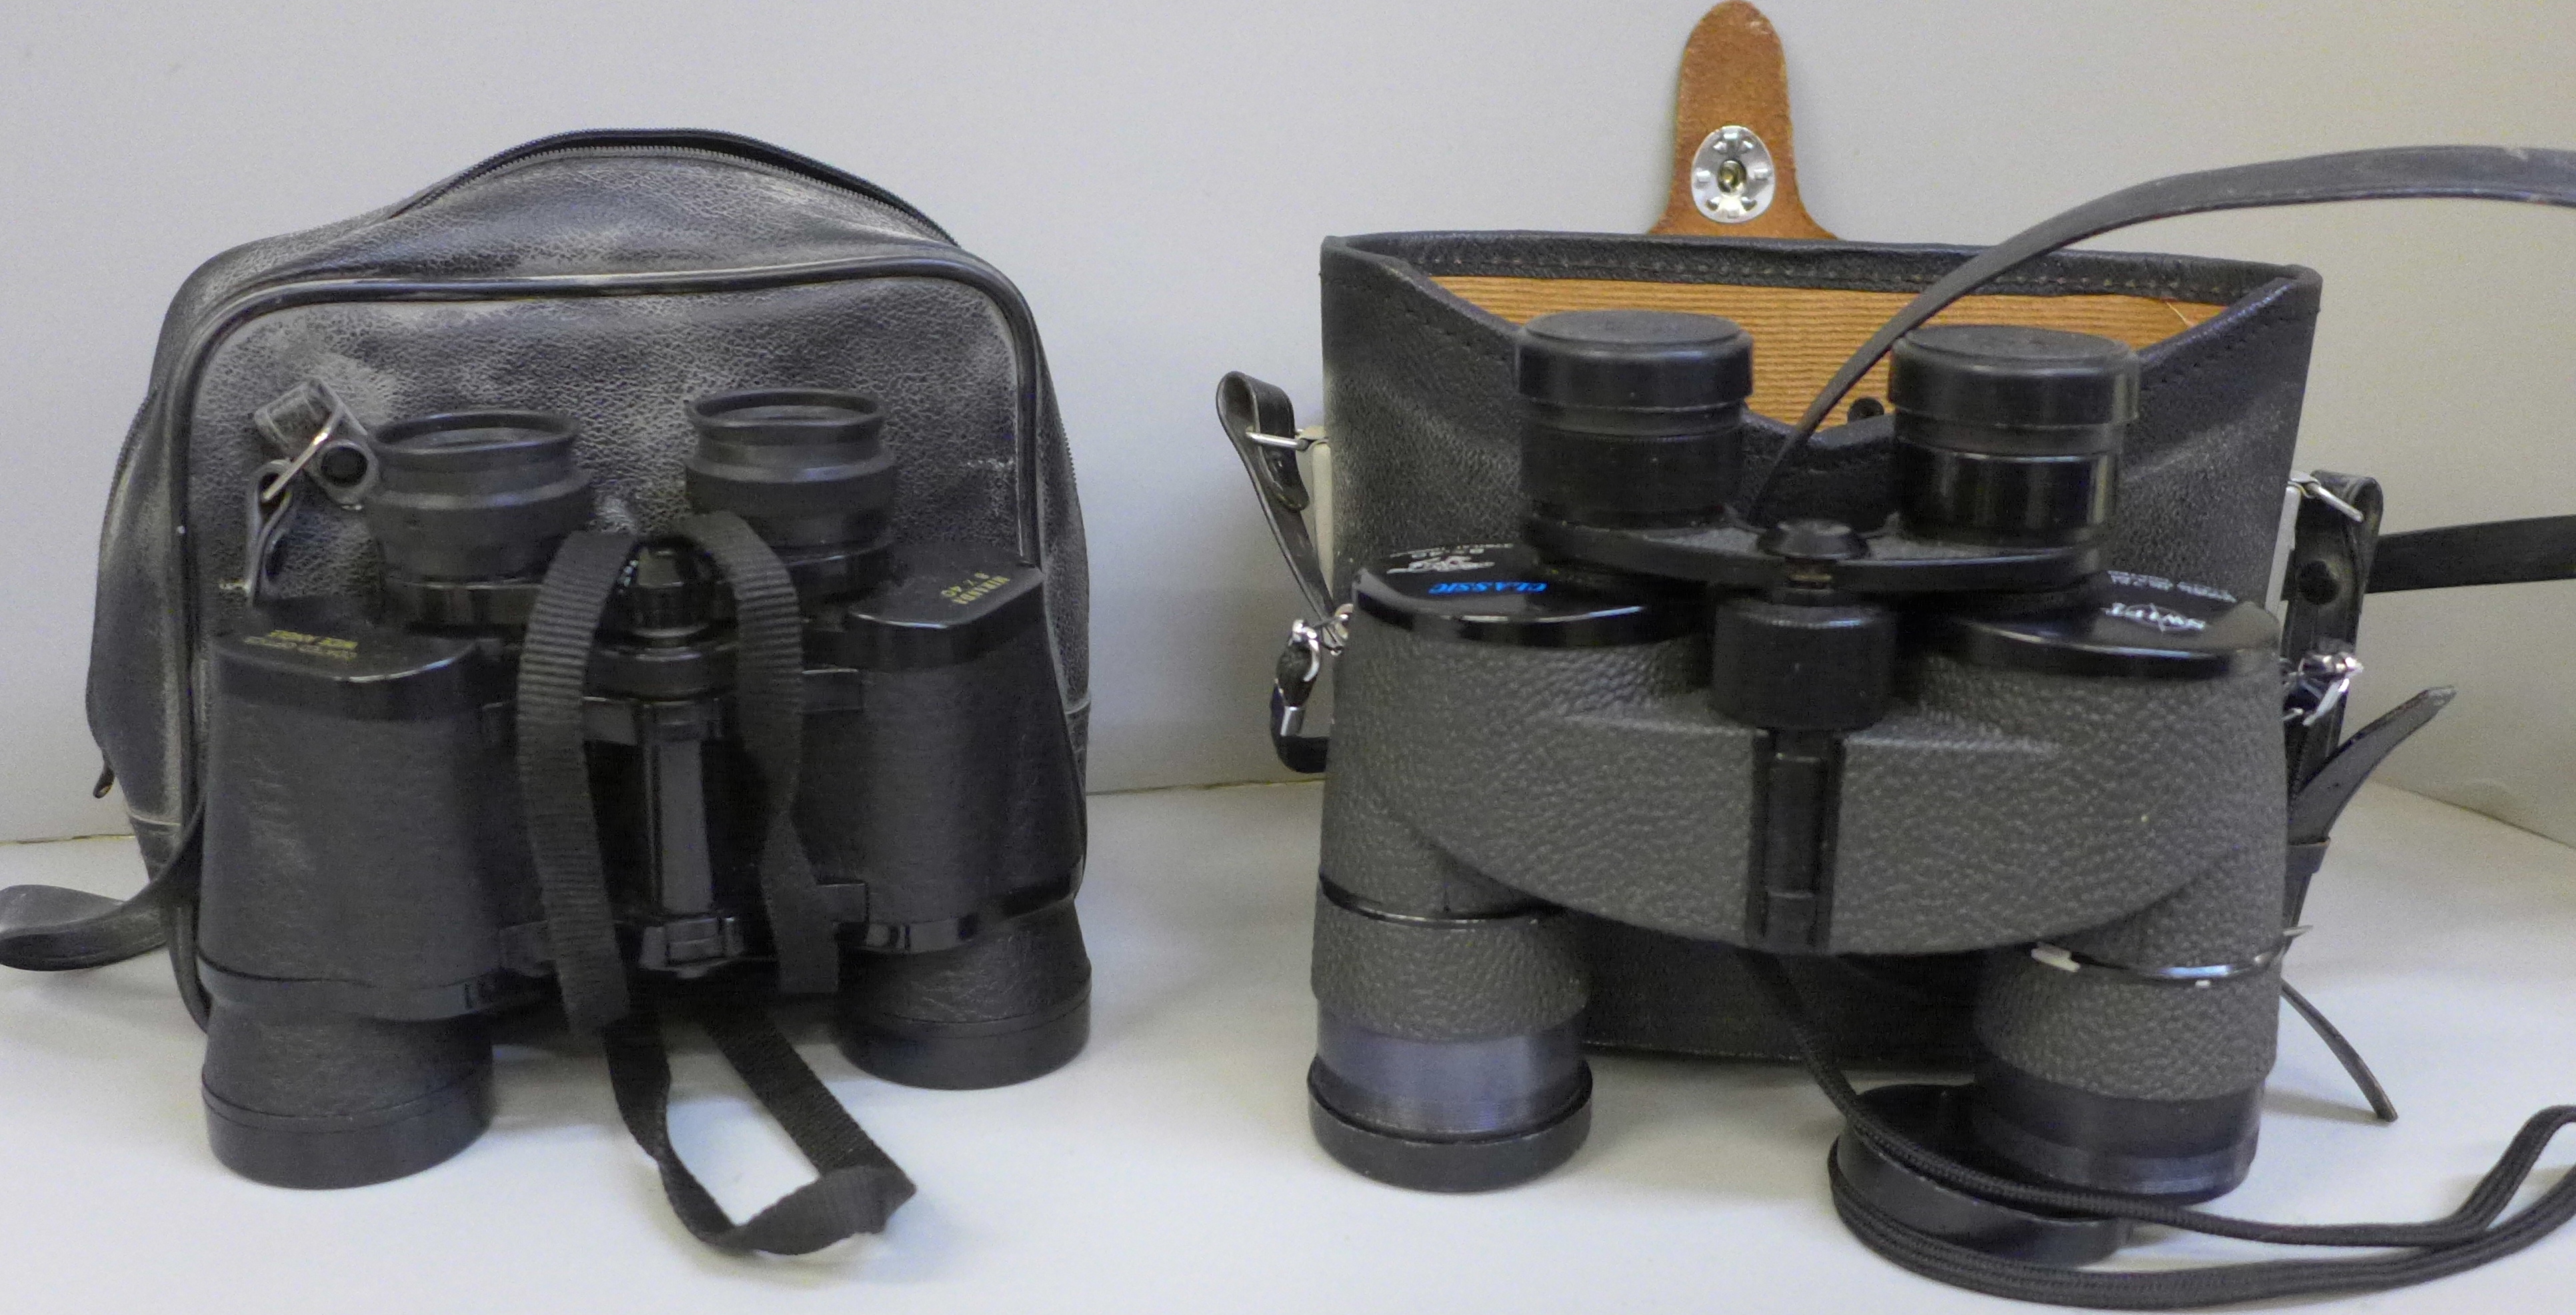 Two pairs of cased binoculars, Swift No. 721 8 x 40 and Miranda wide angle 8 x 40